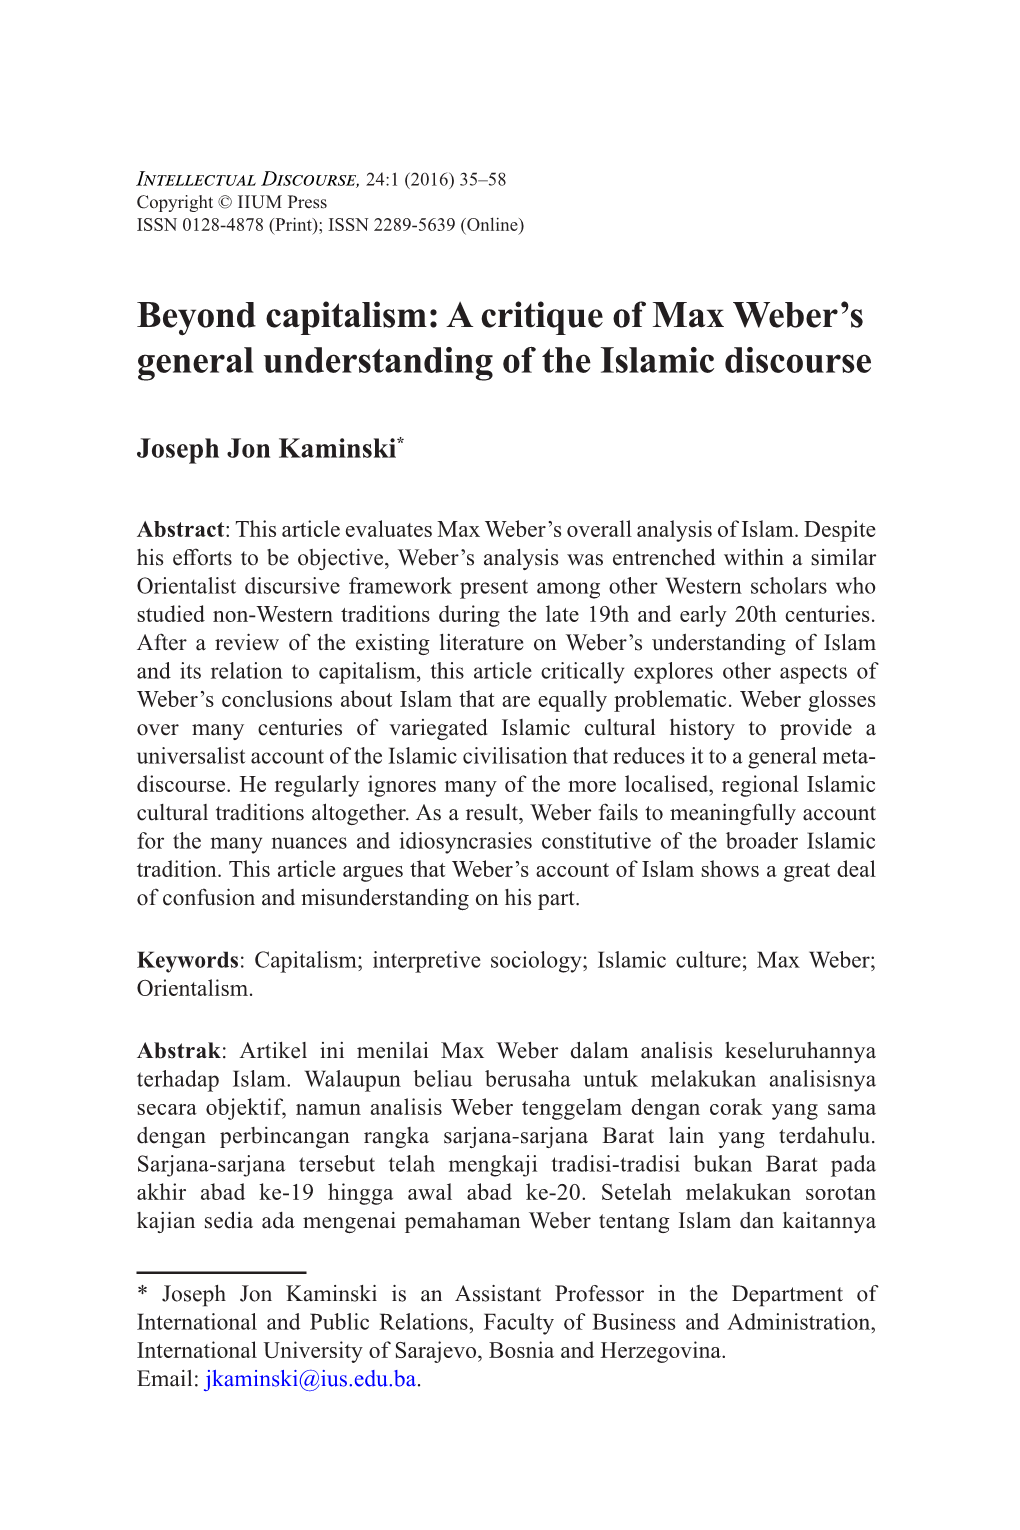 Beyond Capitalism: a Critique of Max Weber's